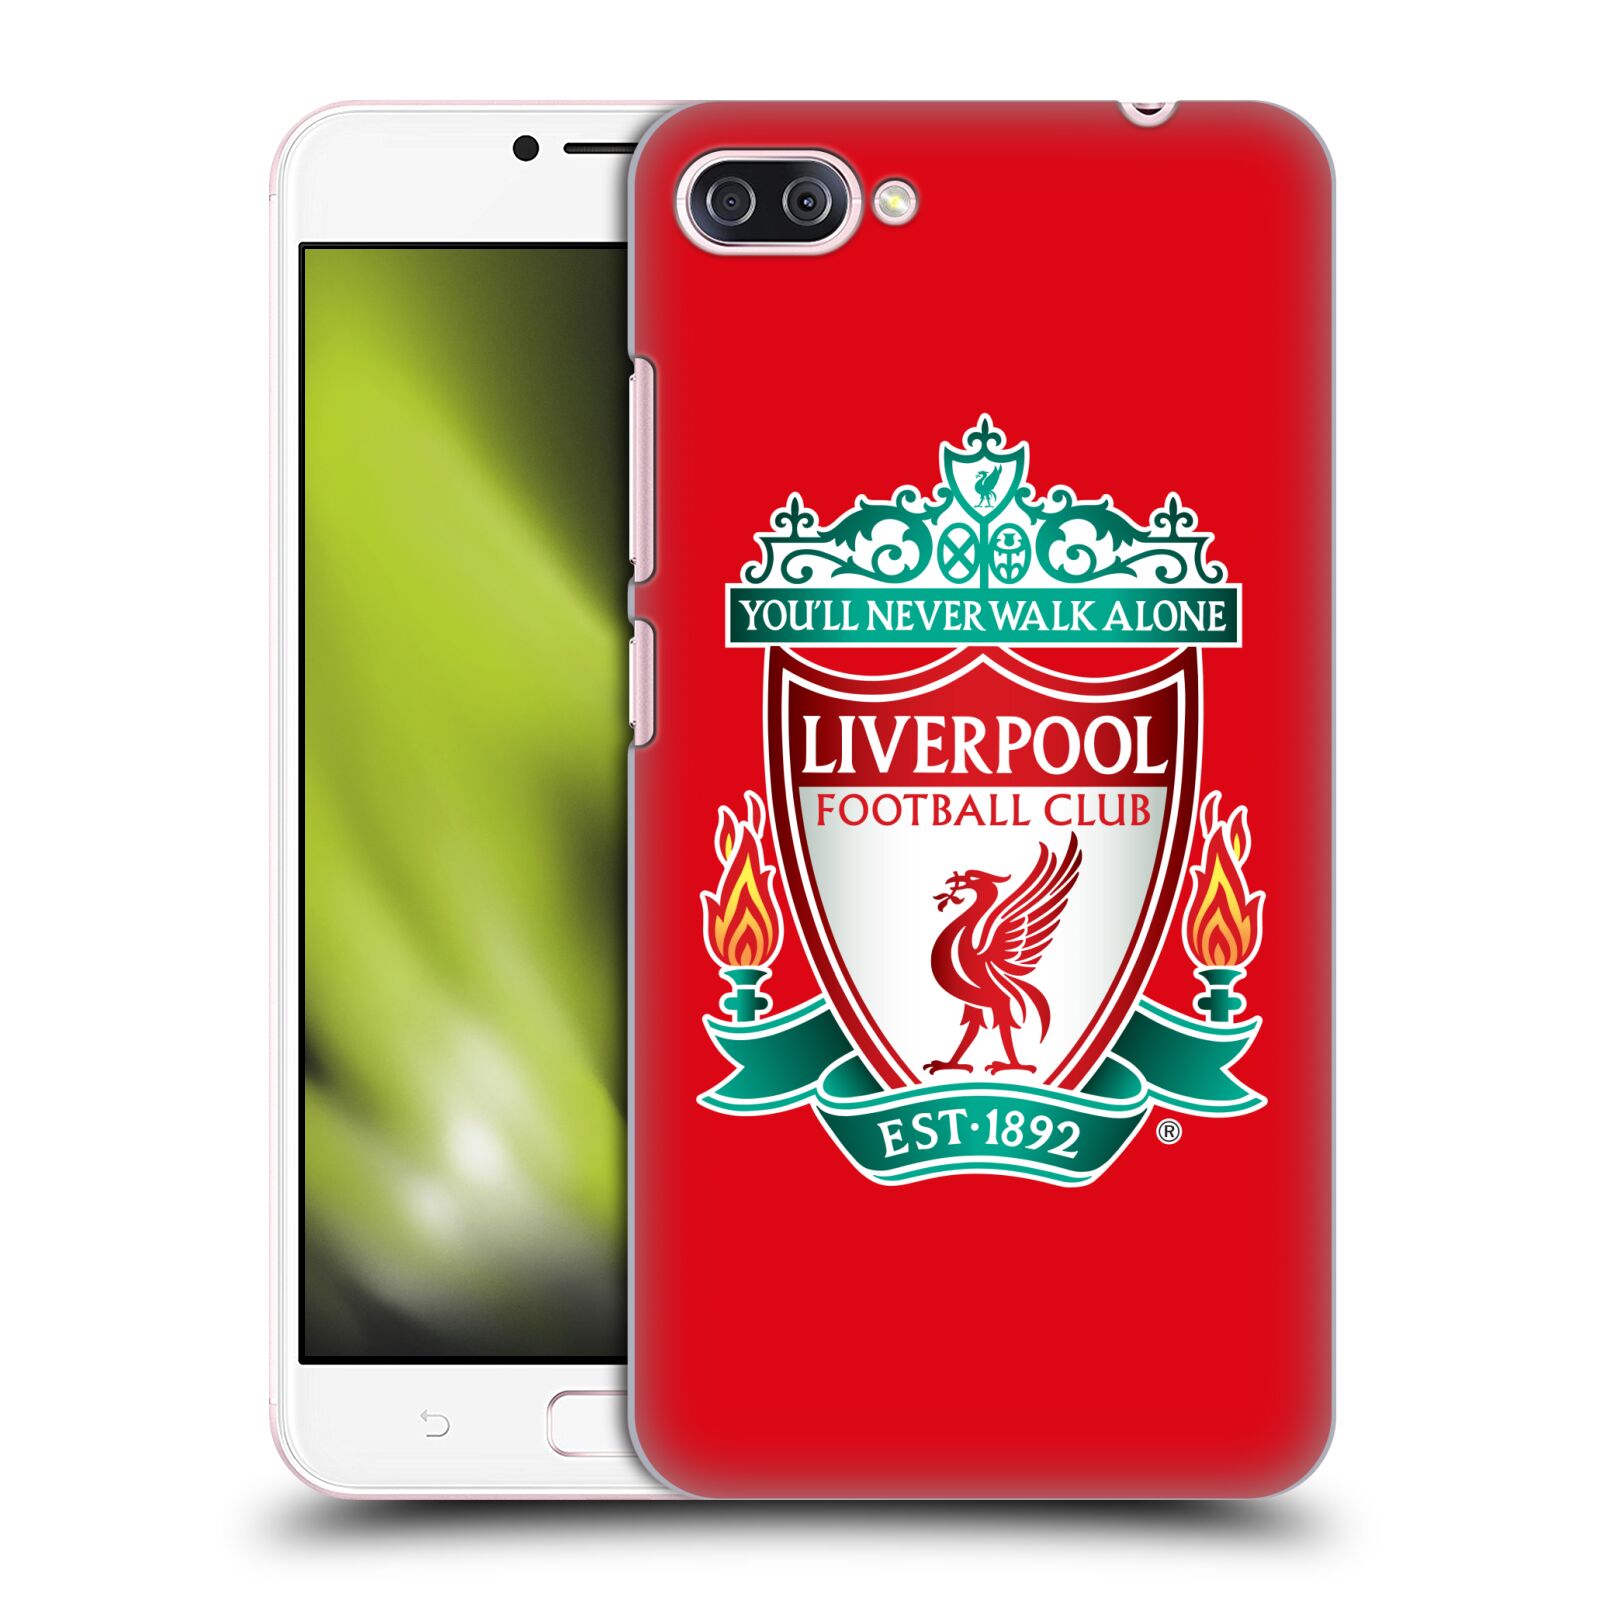 HEAD CASE plastový obal na mobil Asus Zenfone 4 MAX ZC554KL Fotbalový klub Liverpool barevný znak červené pozadí